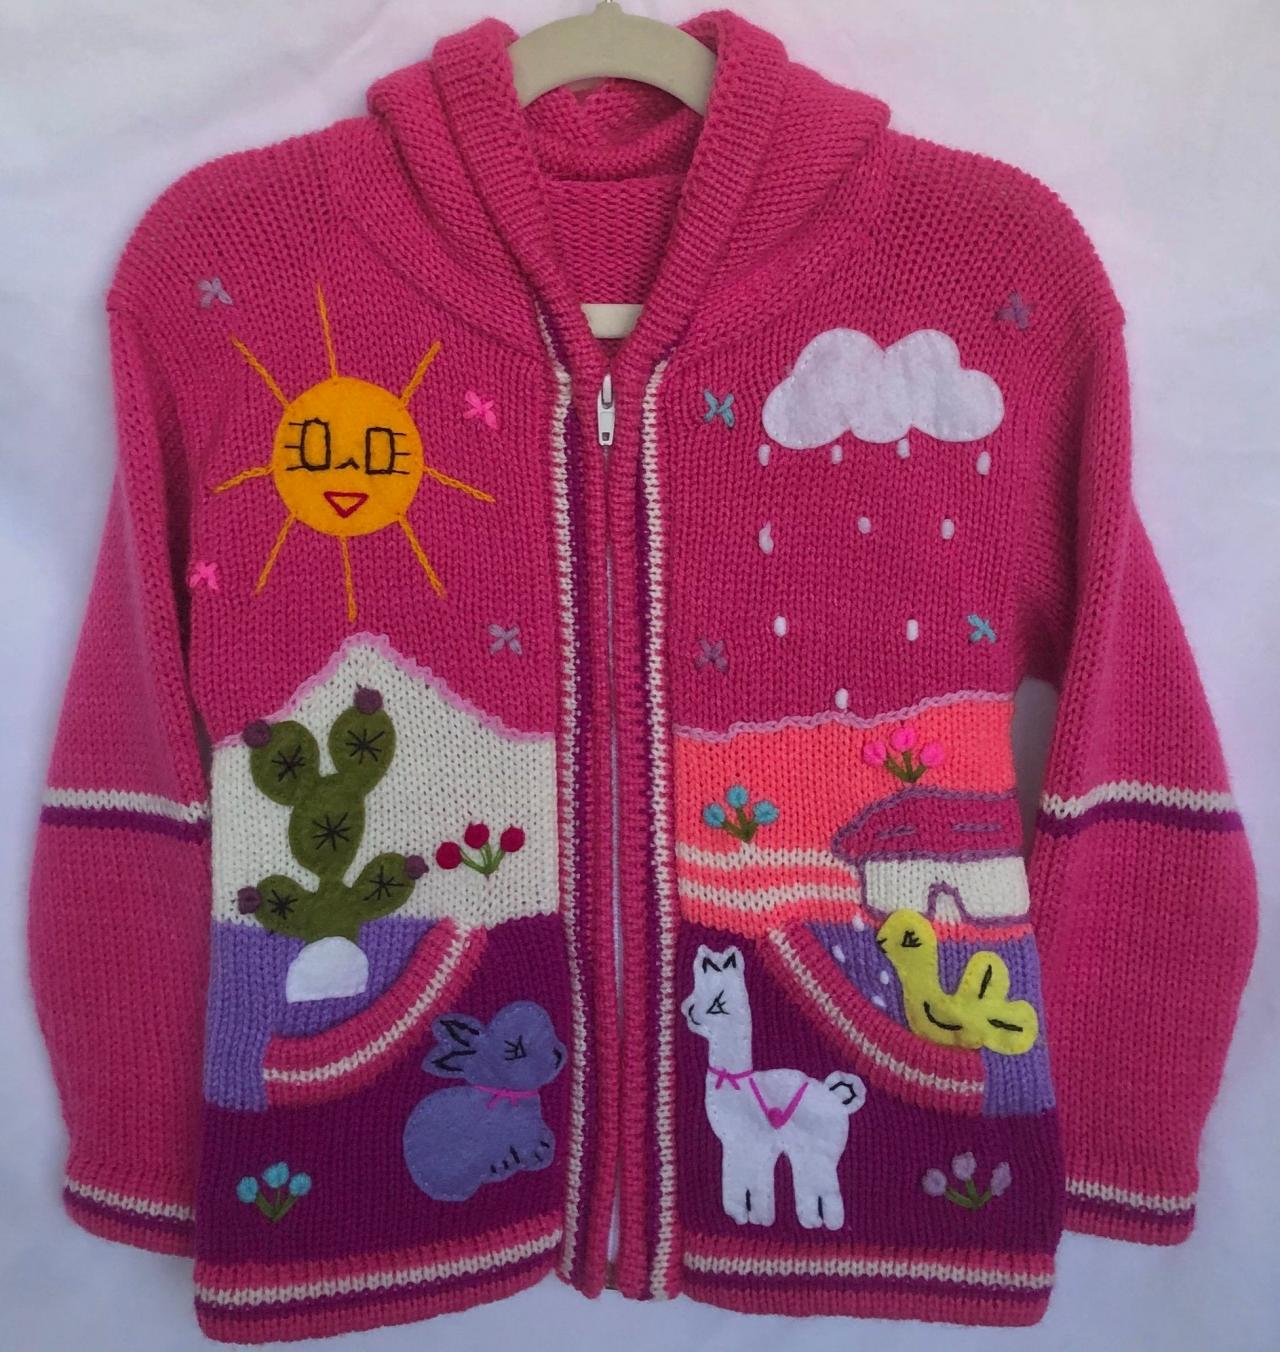 Size 6 Hooded Jacket, Pink Jacket, Kids Jacket, Handmade Jacket, Knitwear Jacket, Children Sweater, Long Sleeve Jacket, Winter Jacket